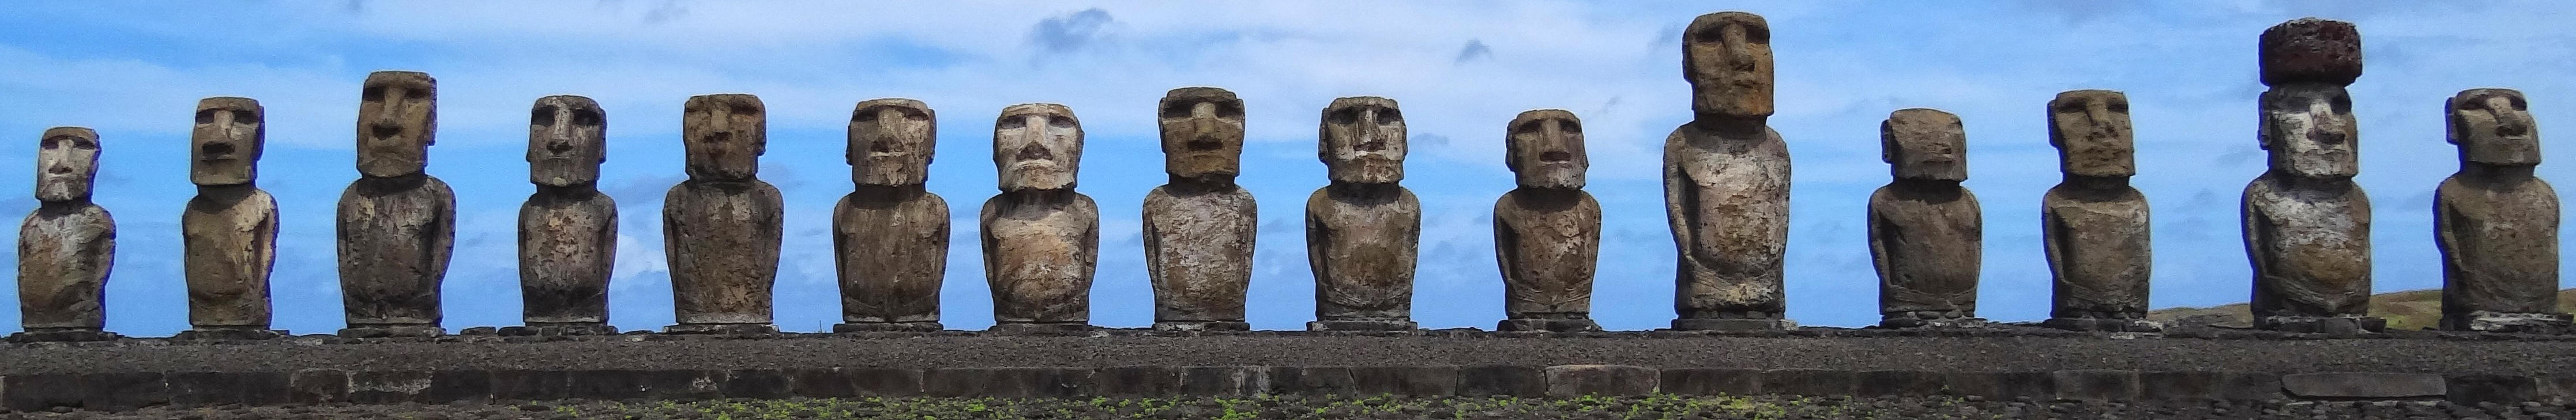 Die Moai auf Rapa Nui